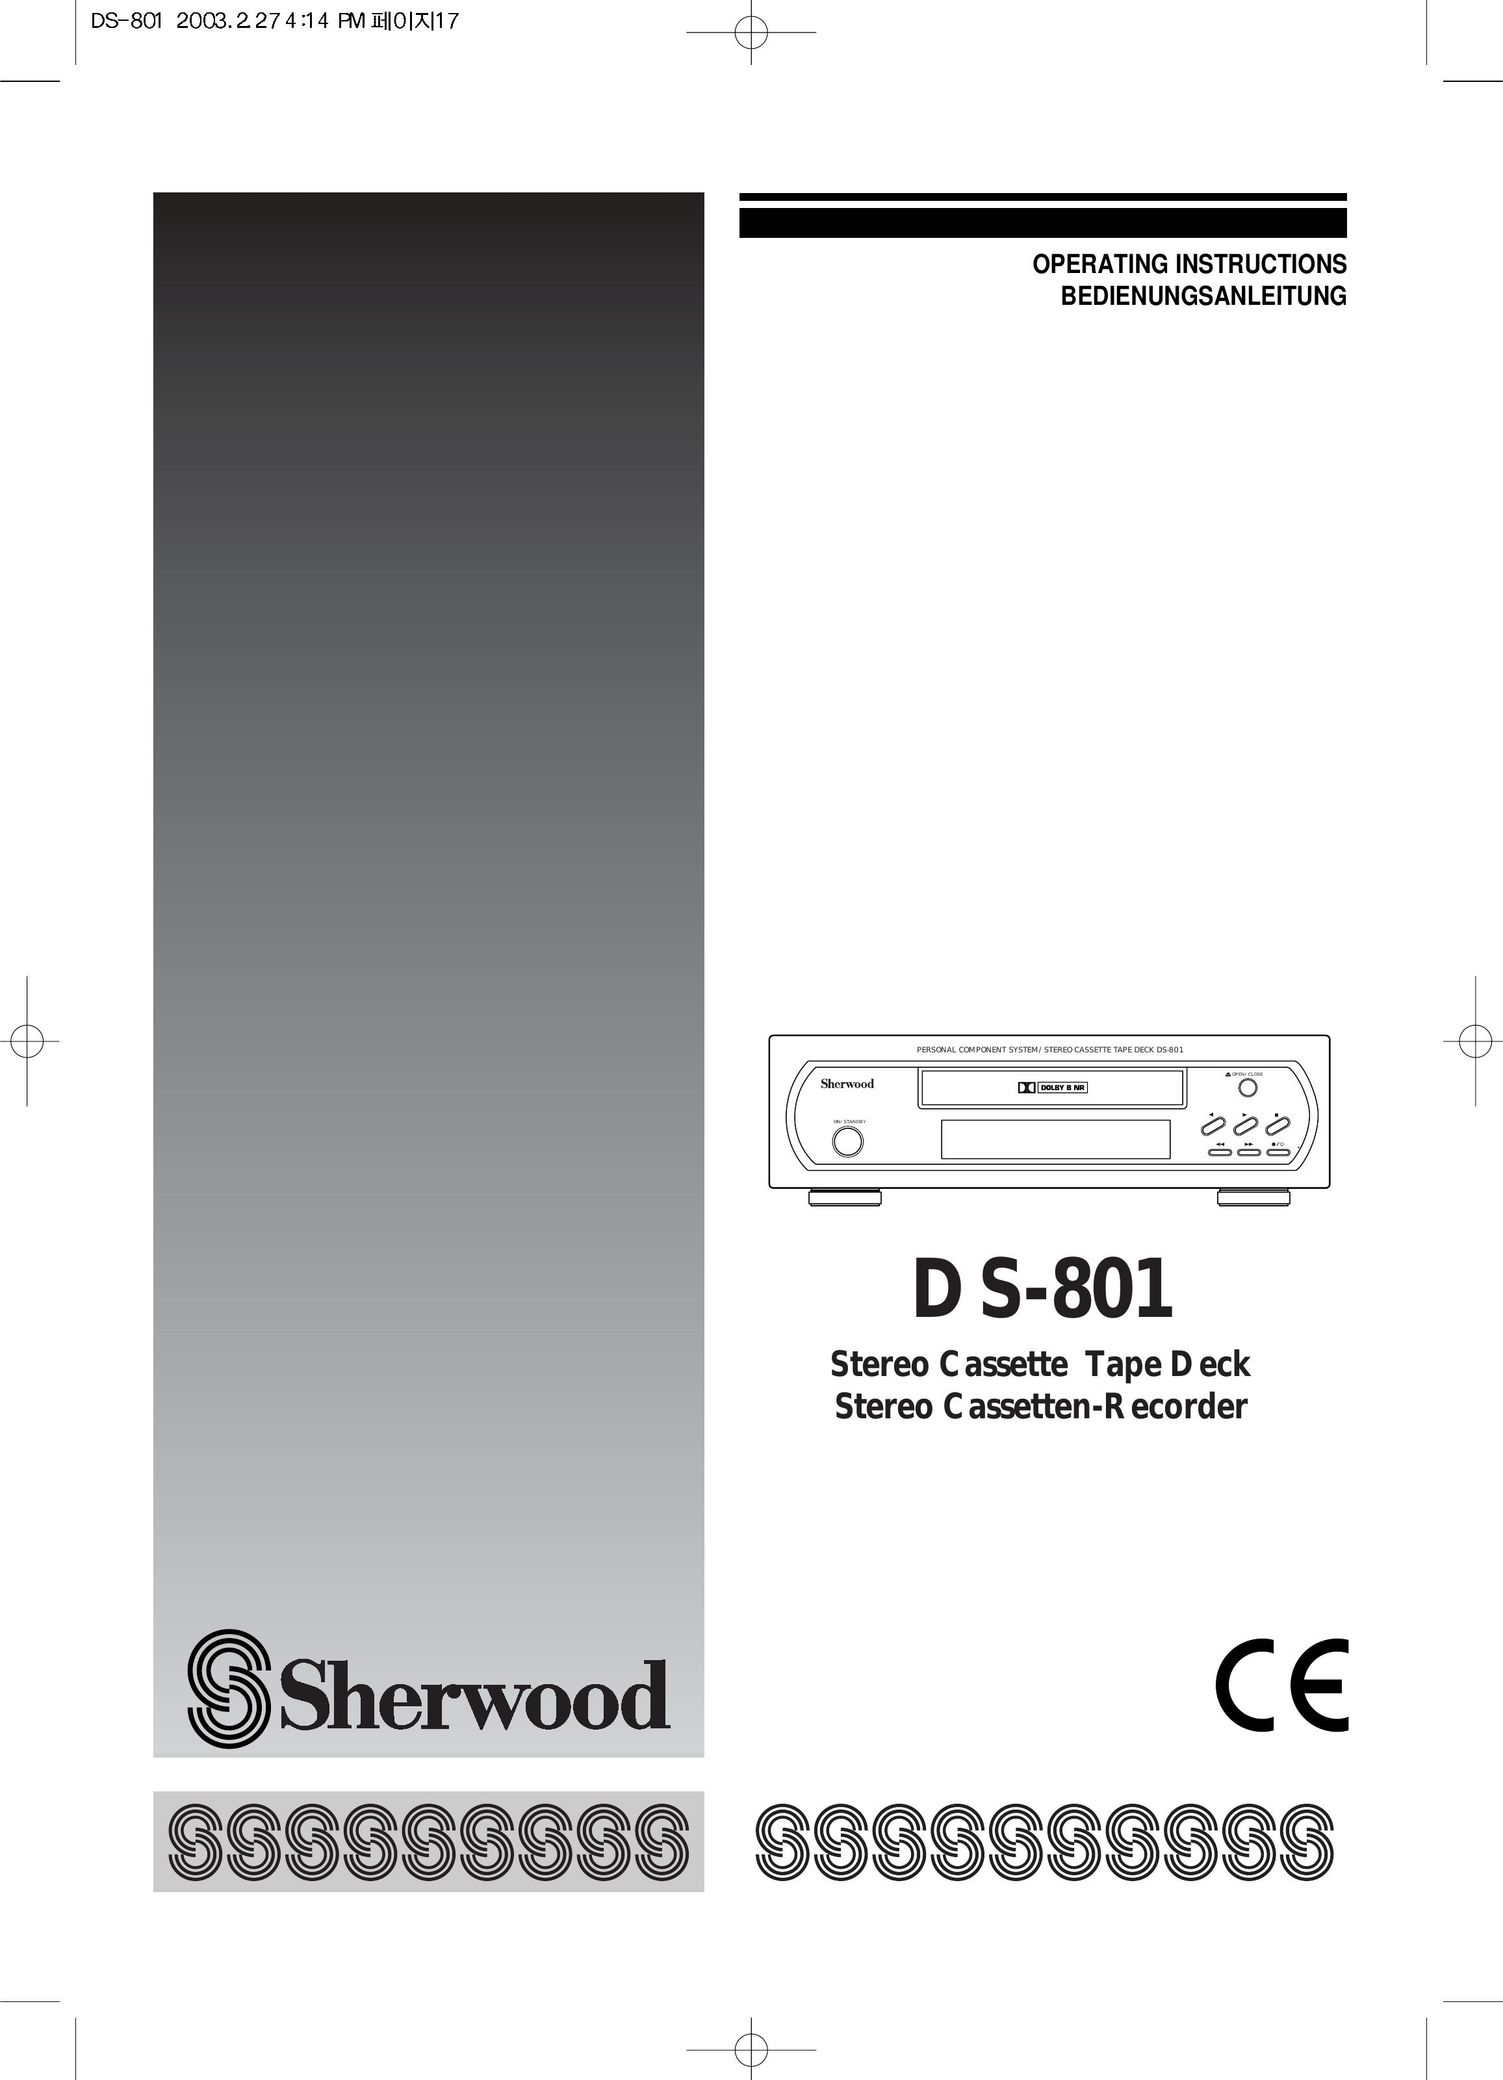 Sherwood DS-801 Cassette Player User Manual